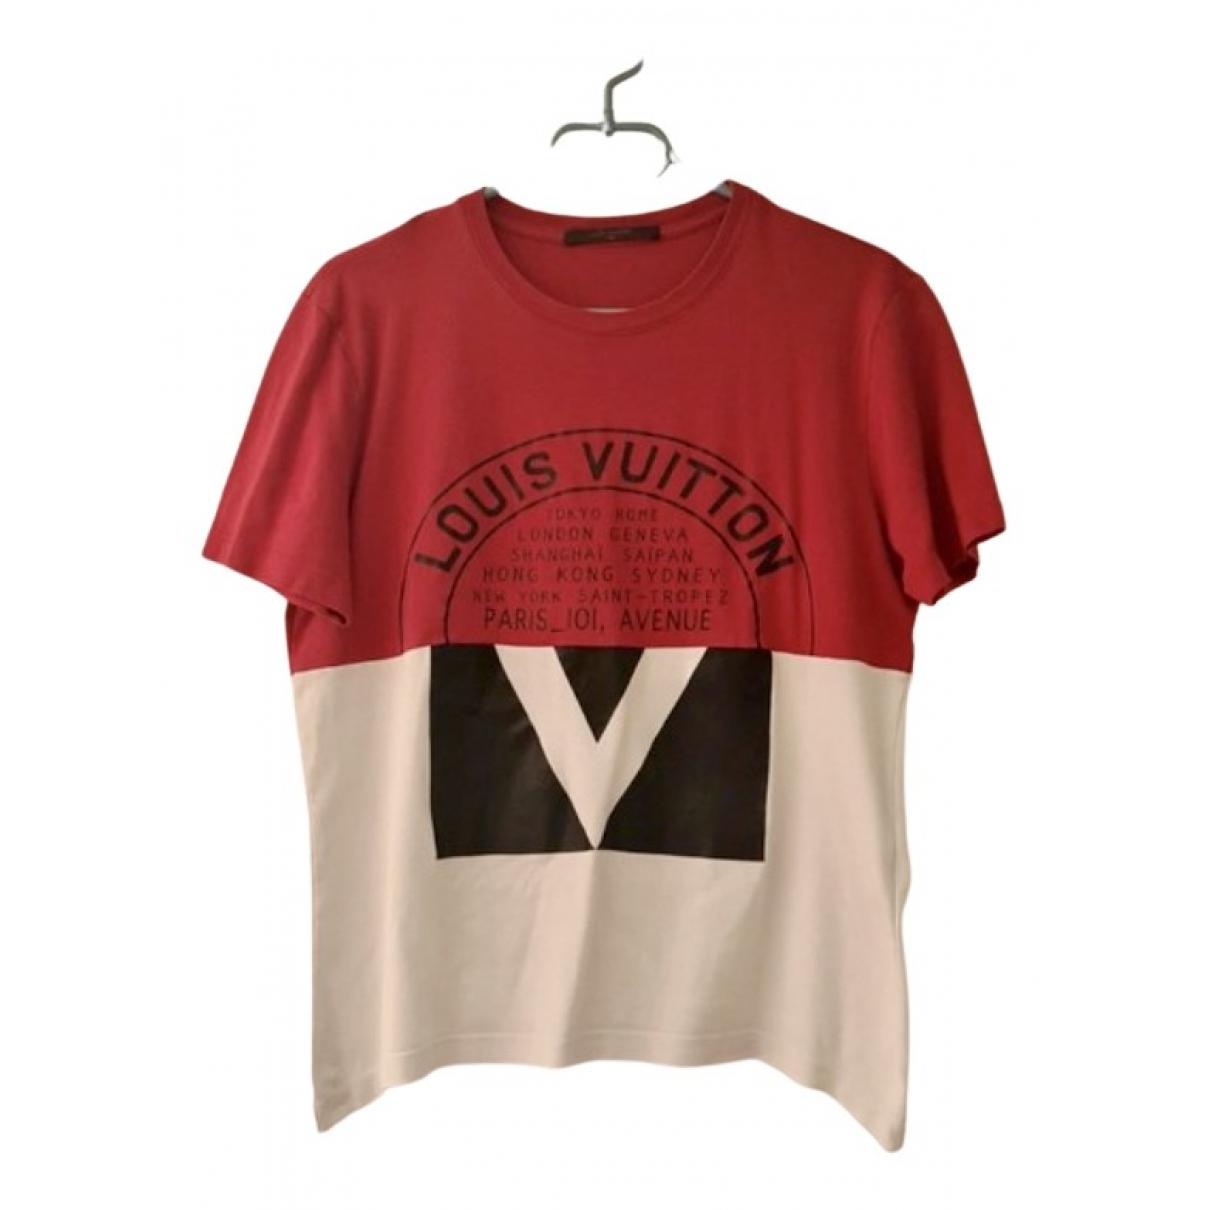 Camisetas Louis vuitton Rojo talla S International de en Algodón - 24138241